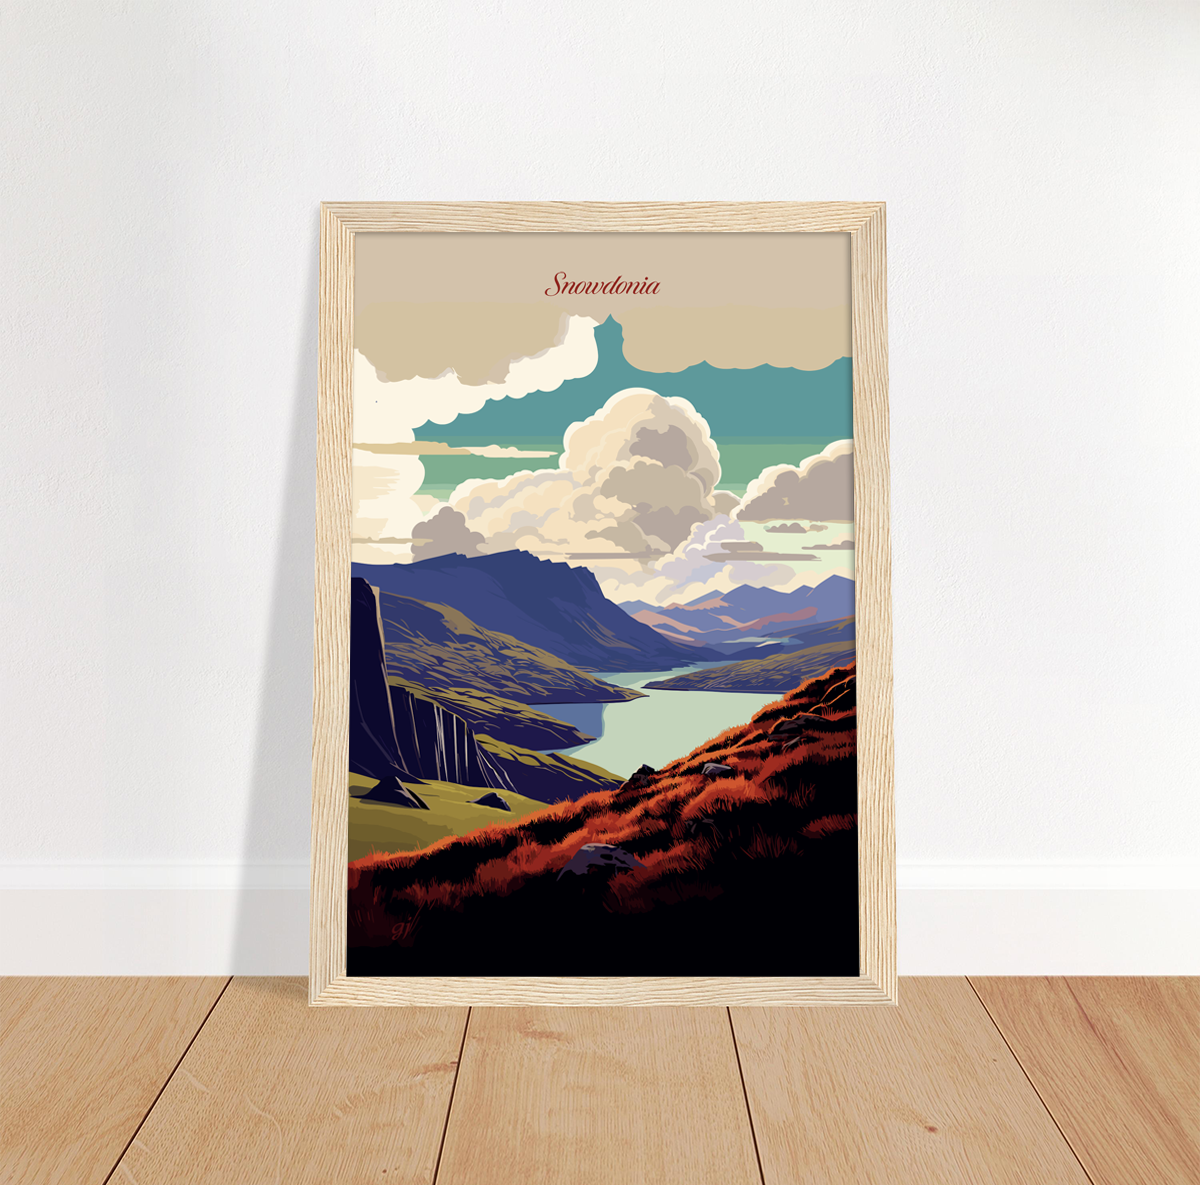 Snowdonia poster by bon voyage design